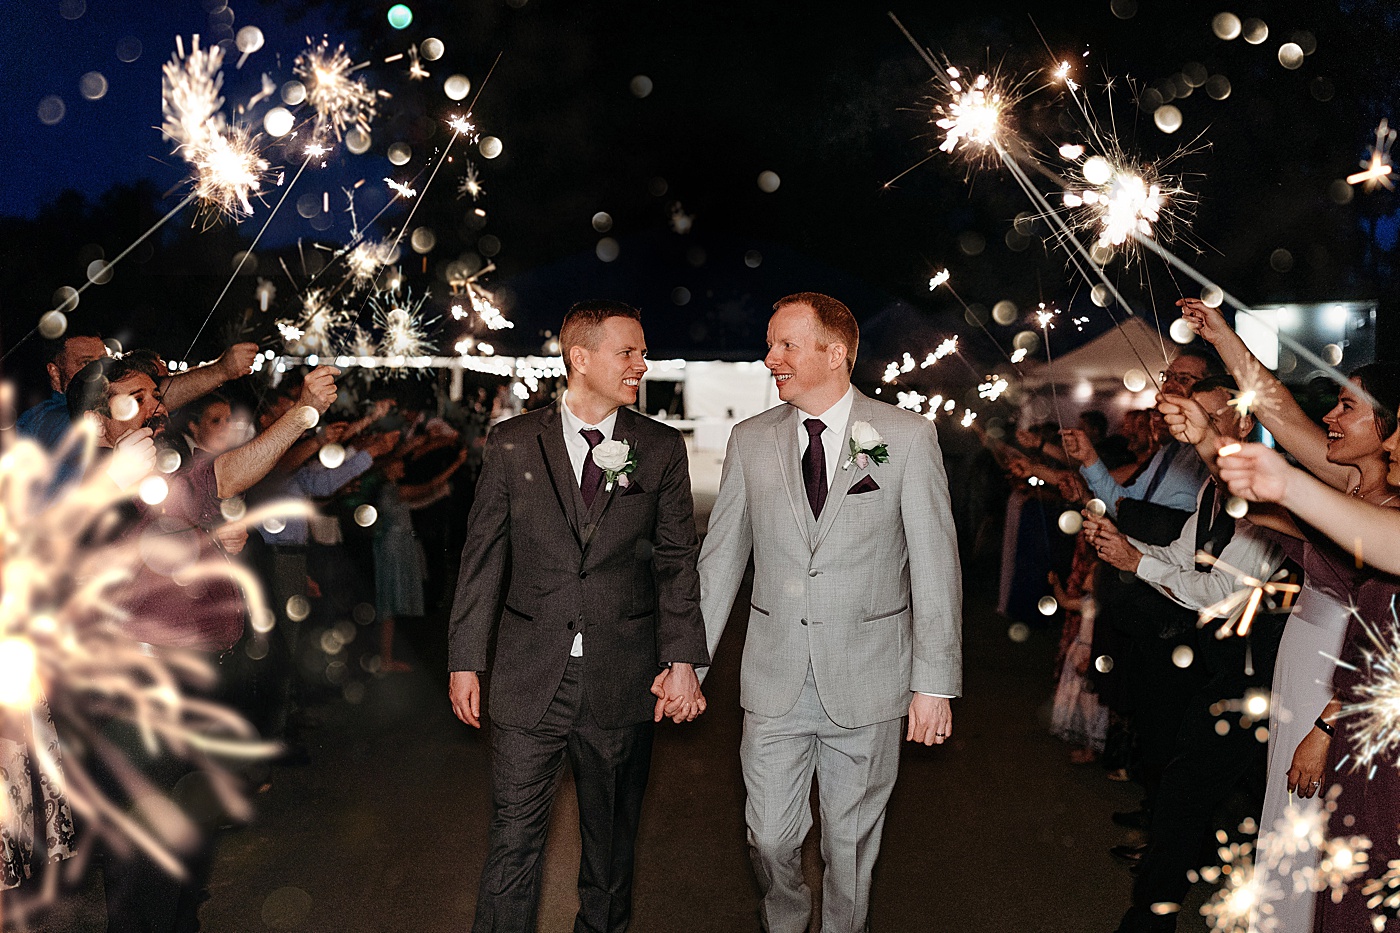 Sparkler exit for same-sex wedding at Washington state intimate wedding venue, Sanders Estate | Megan Montalvo Photography